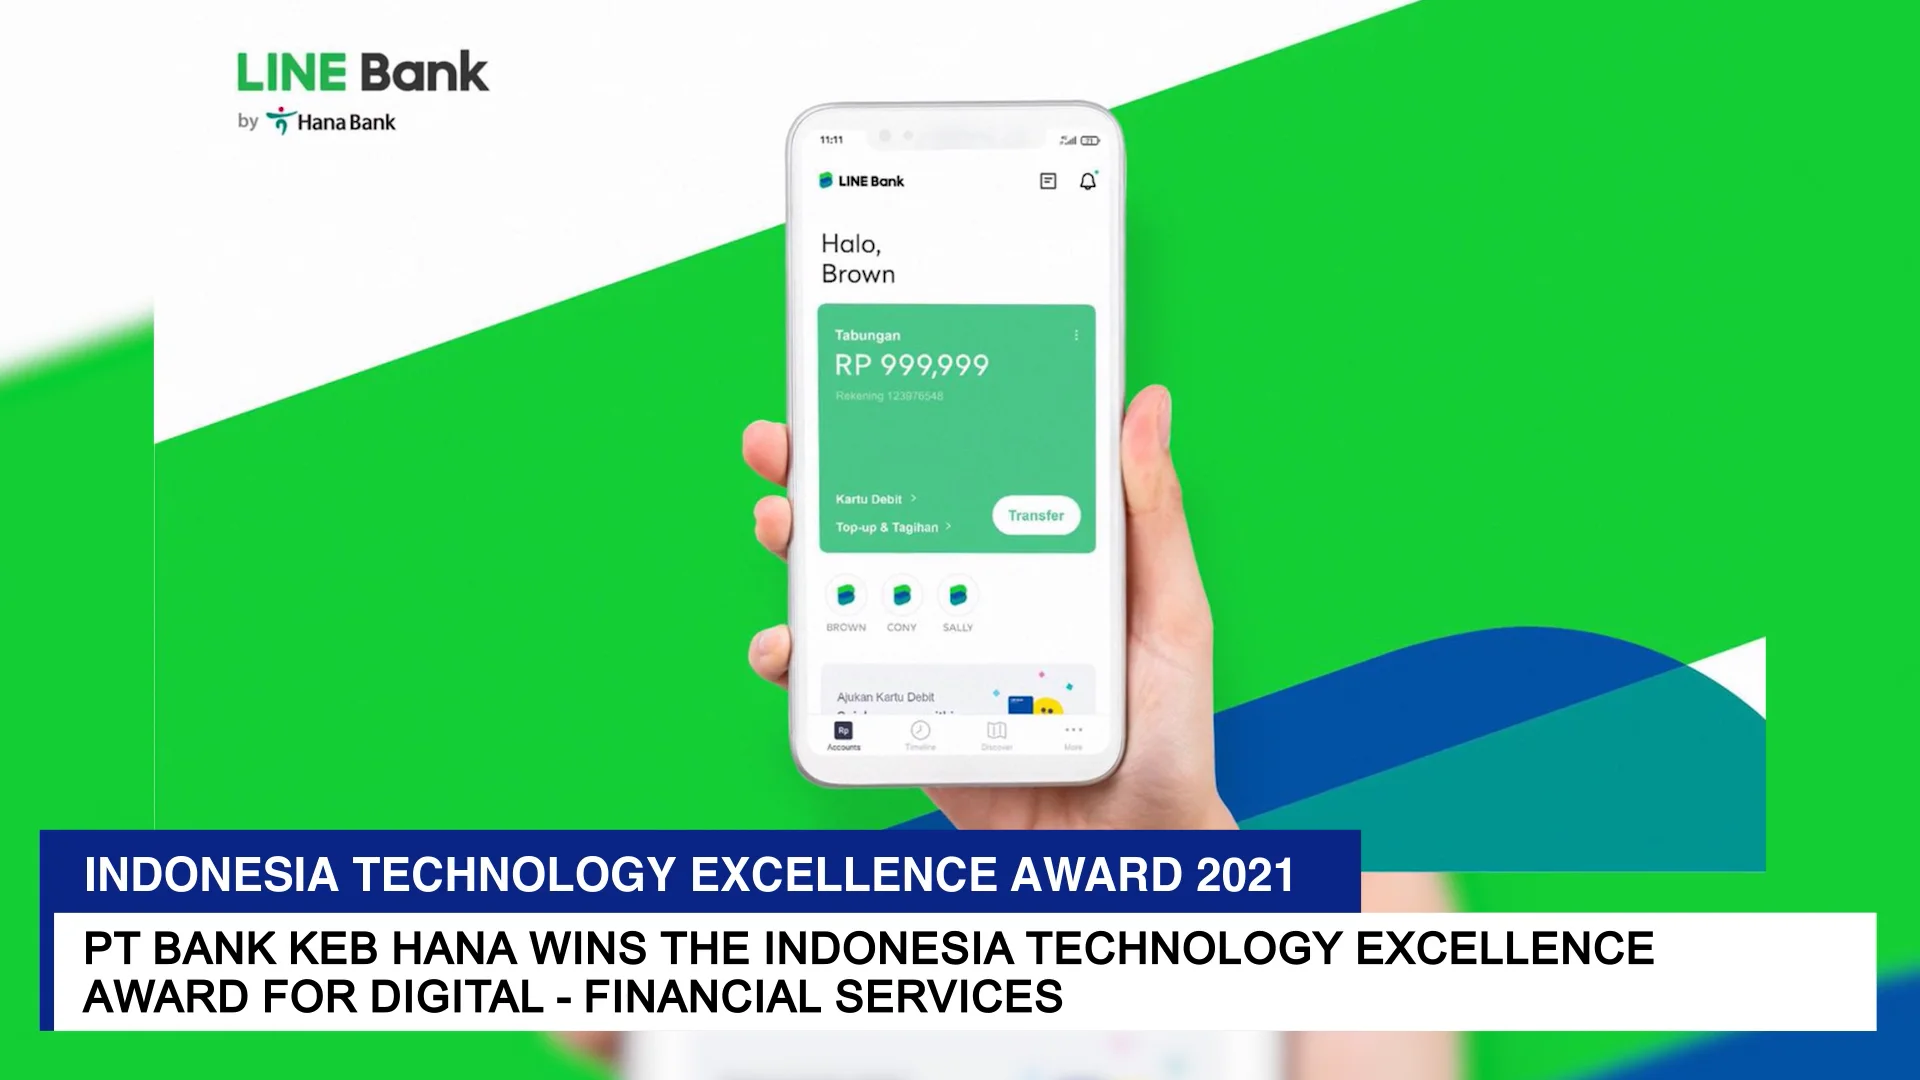 Indonesia Technology Excellence Award 2021 winner: PT Bank KEB